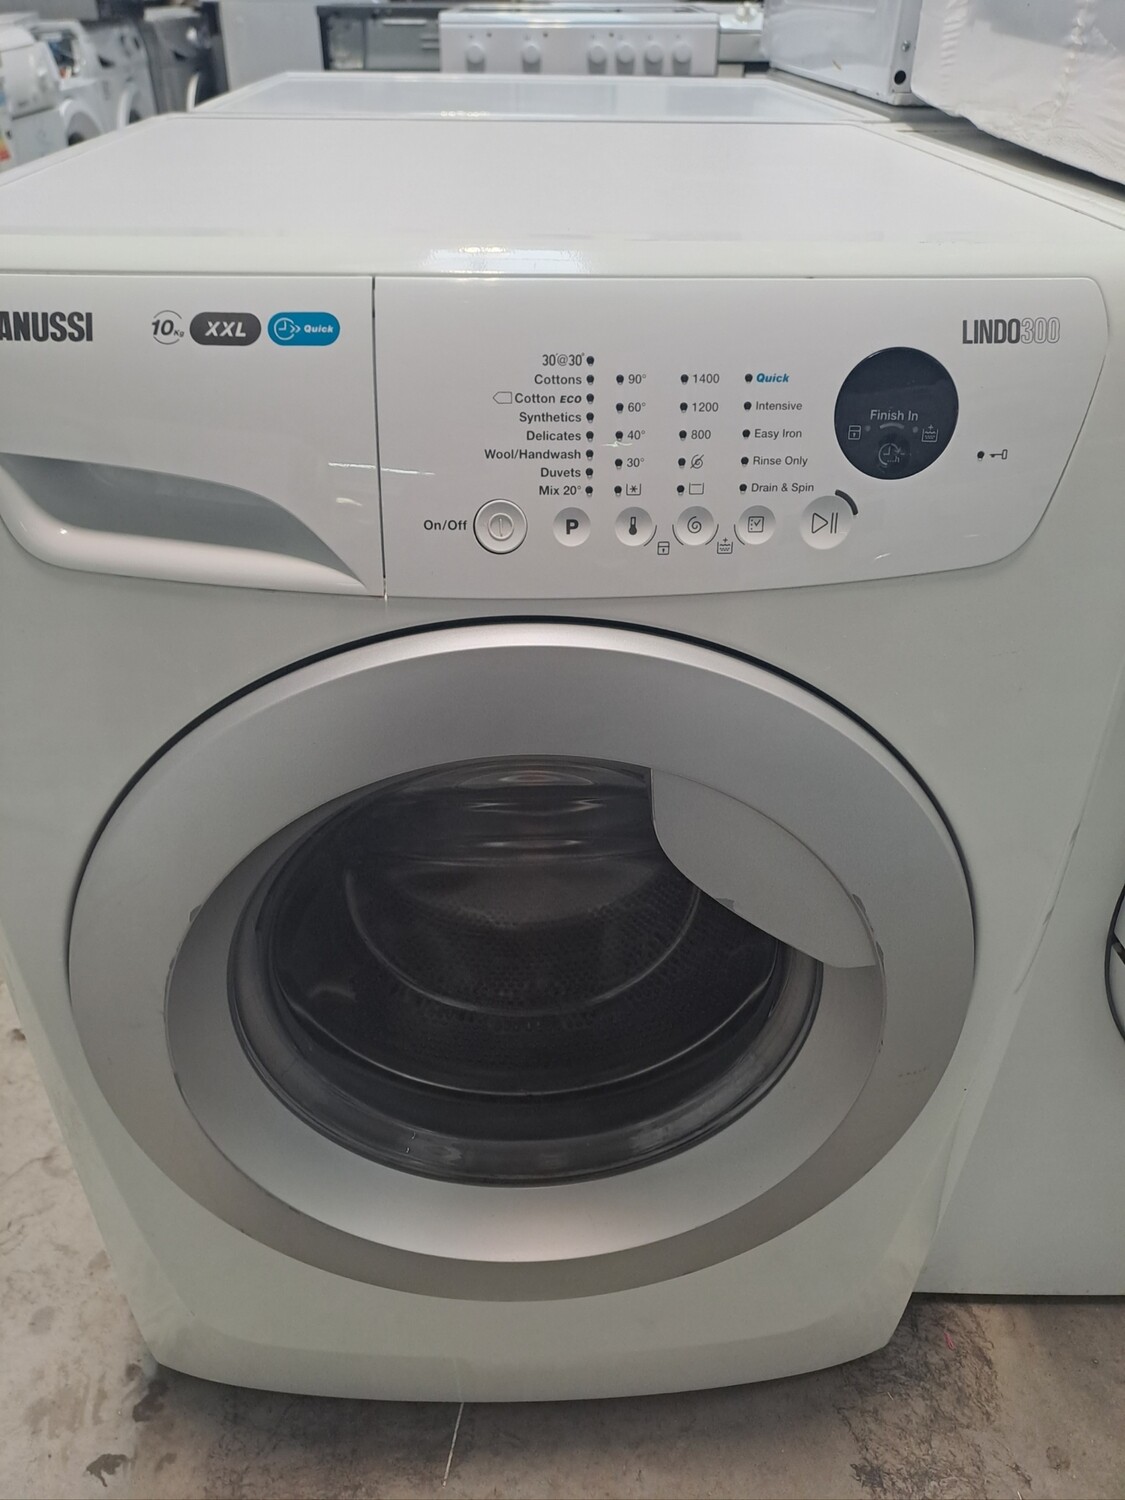 Zanussi ZWF01483WR Lindo300 XXL 10kg Load 1400 Spin Washing Machine - White - Refurbished - 6 Month Guarantee